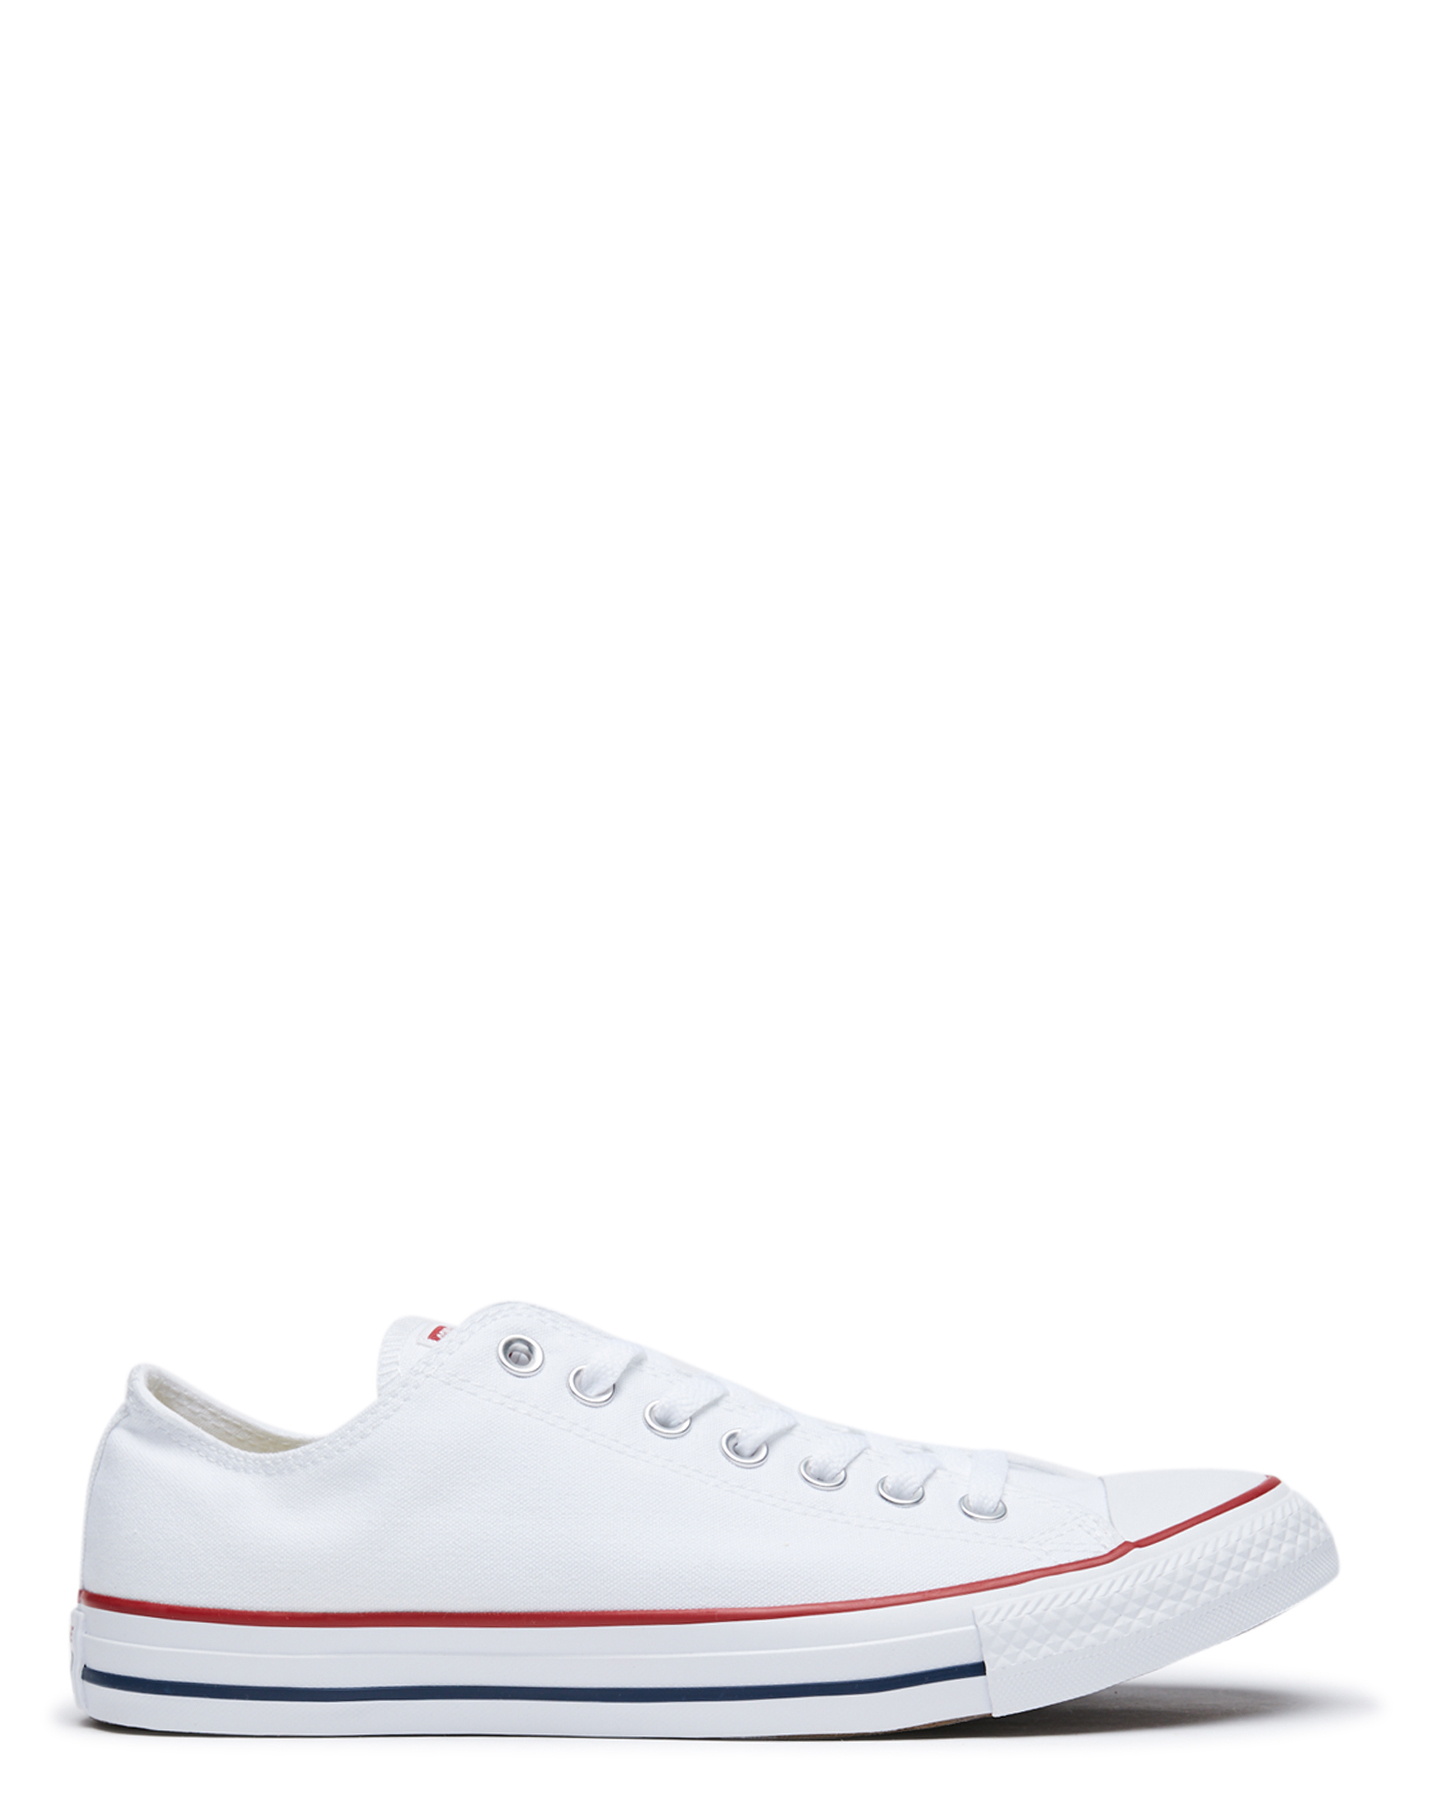 converse white tennis shoes